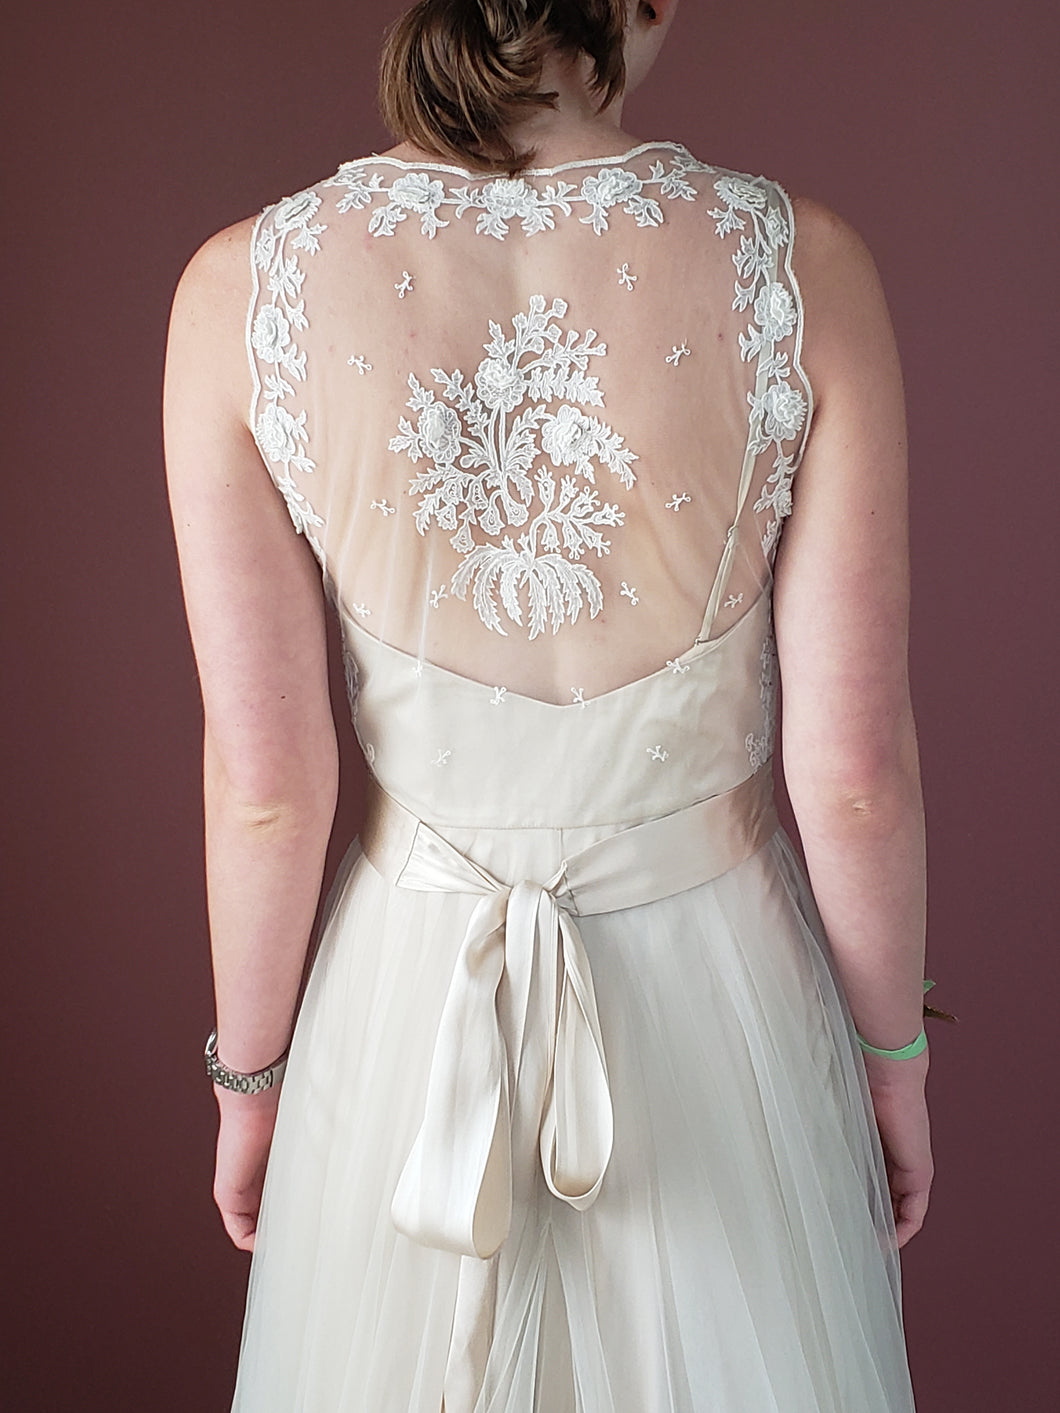 BHLDN 'Onyx' size 4 new wedding dress back view close up on bride